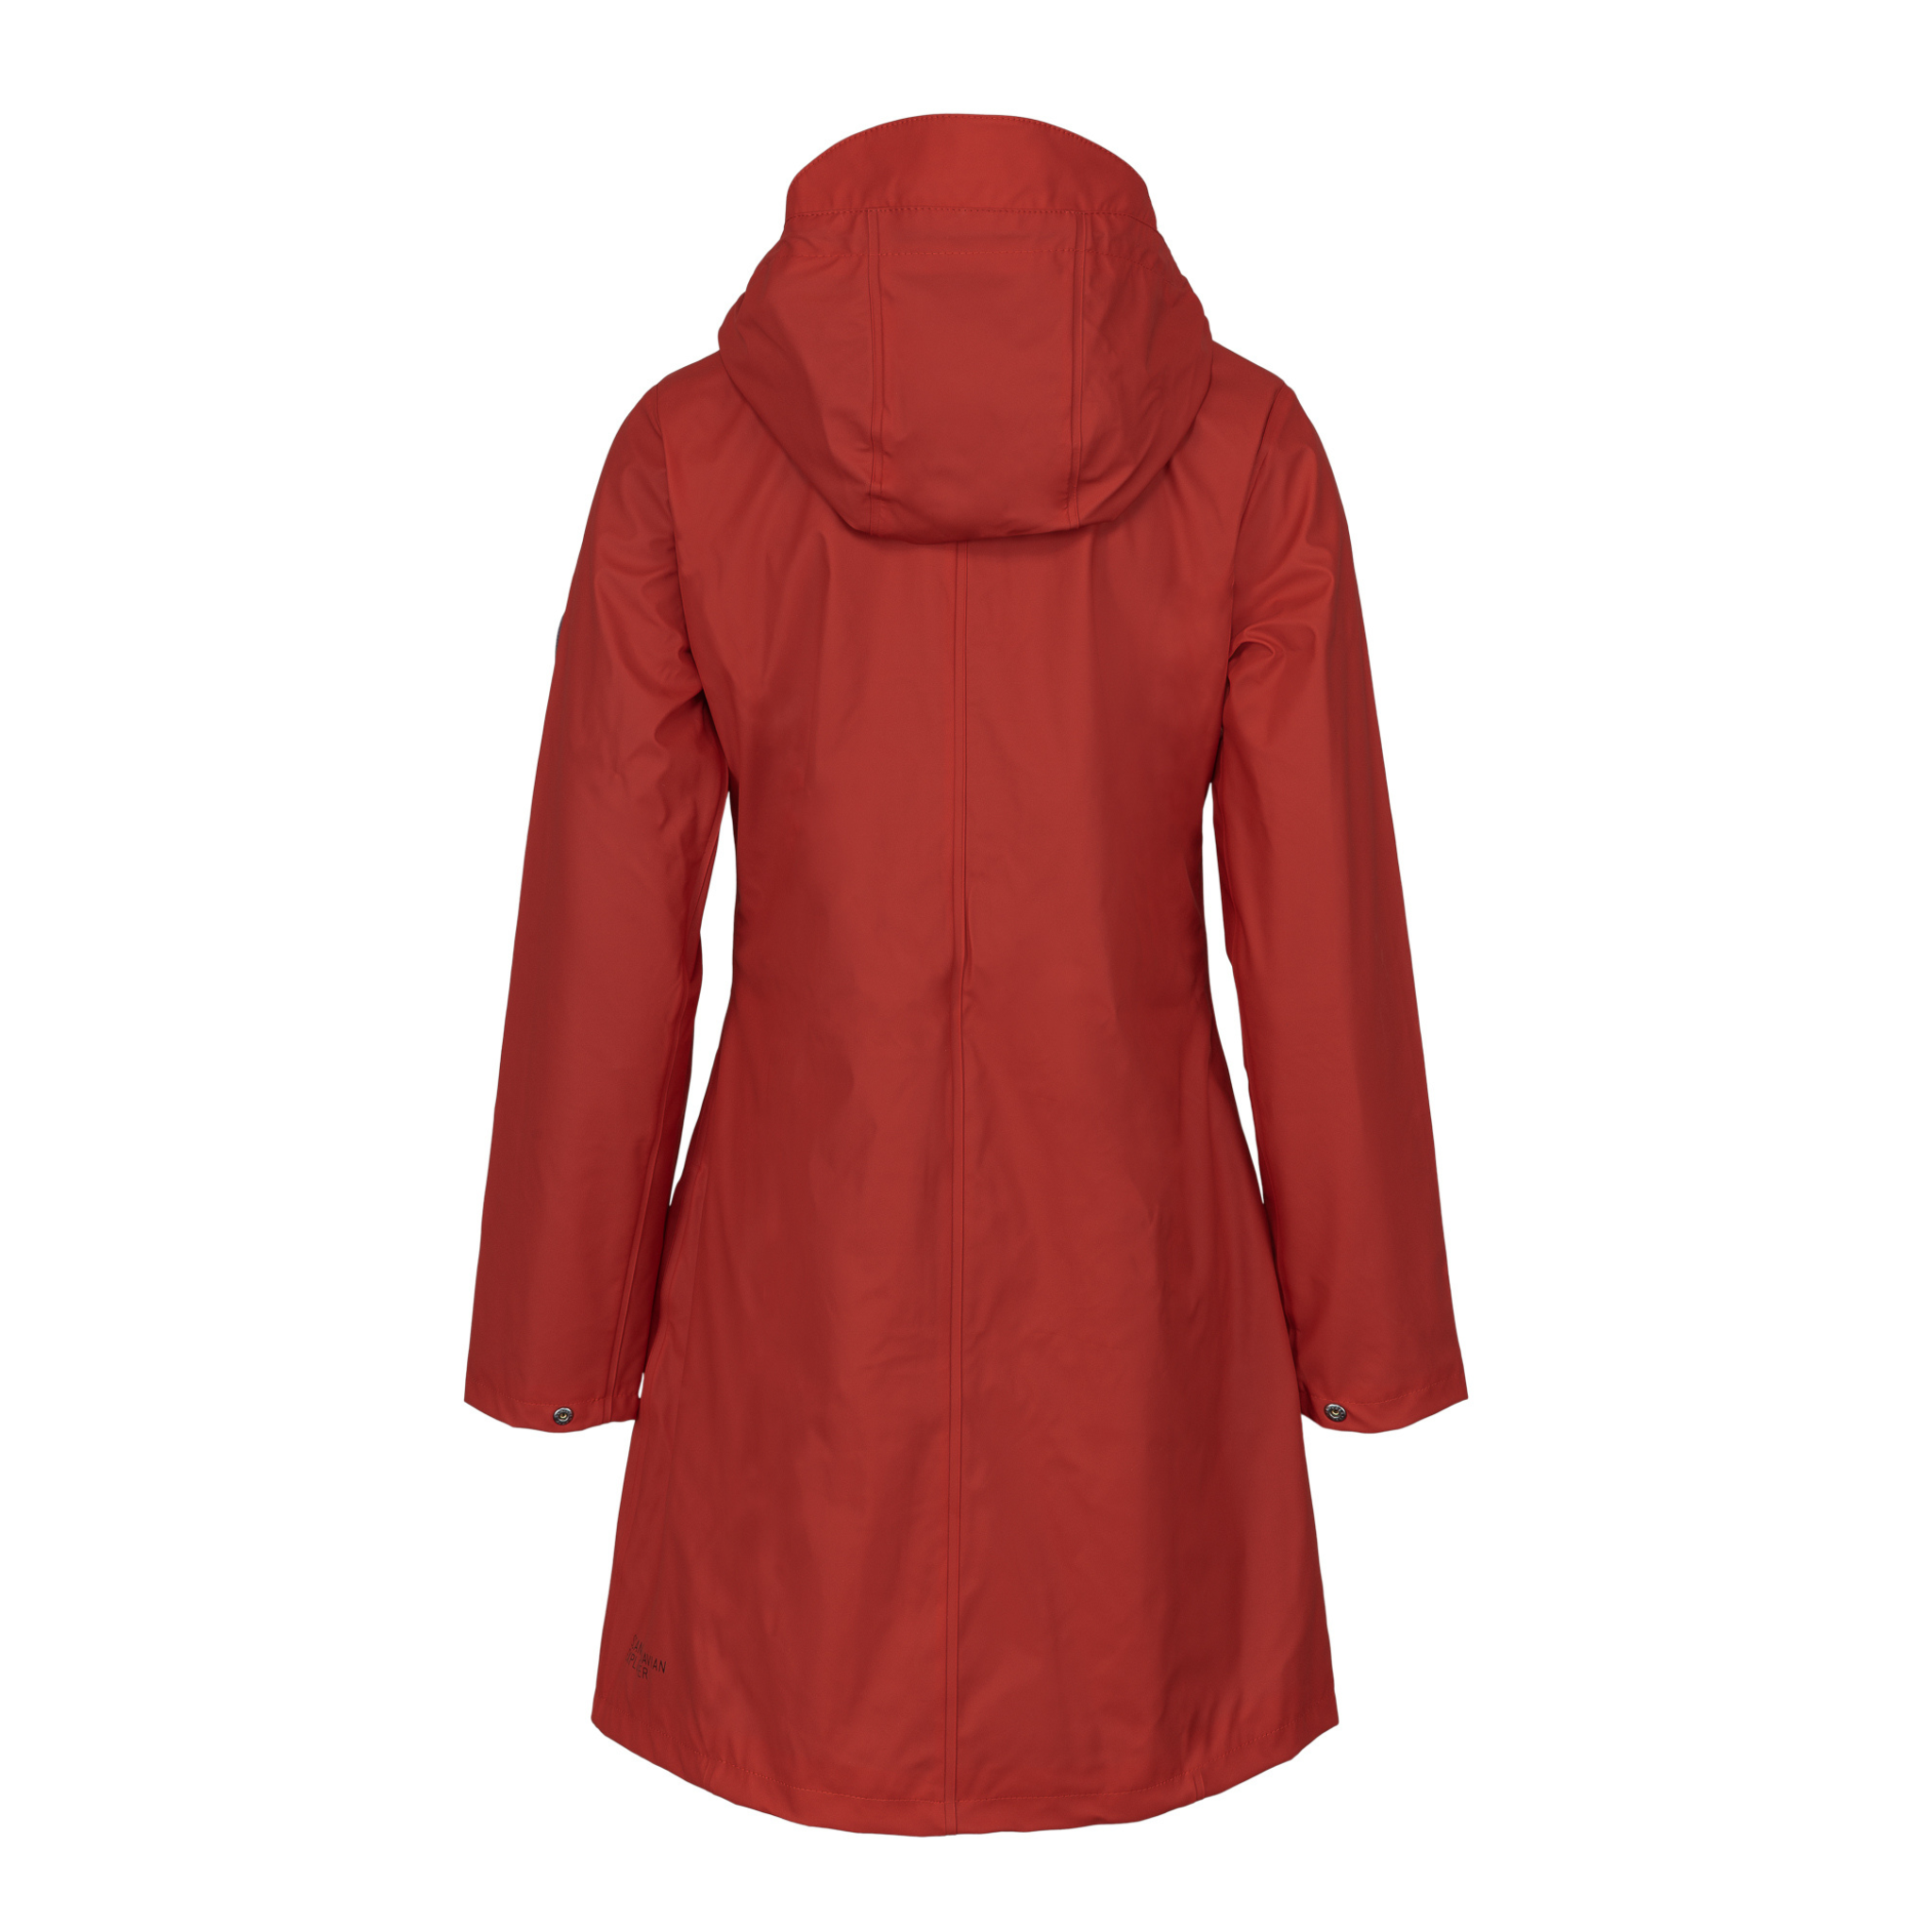 womens raincoat red back